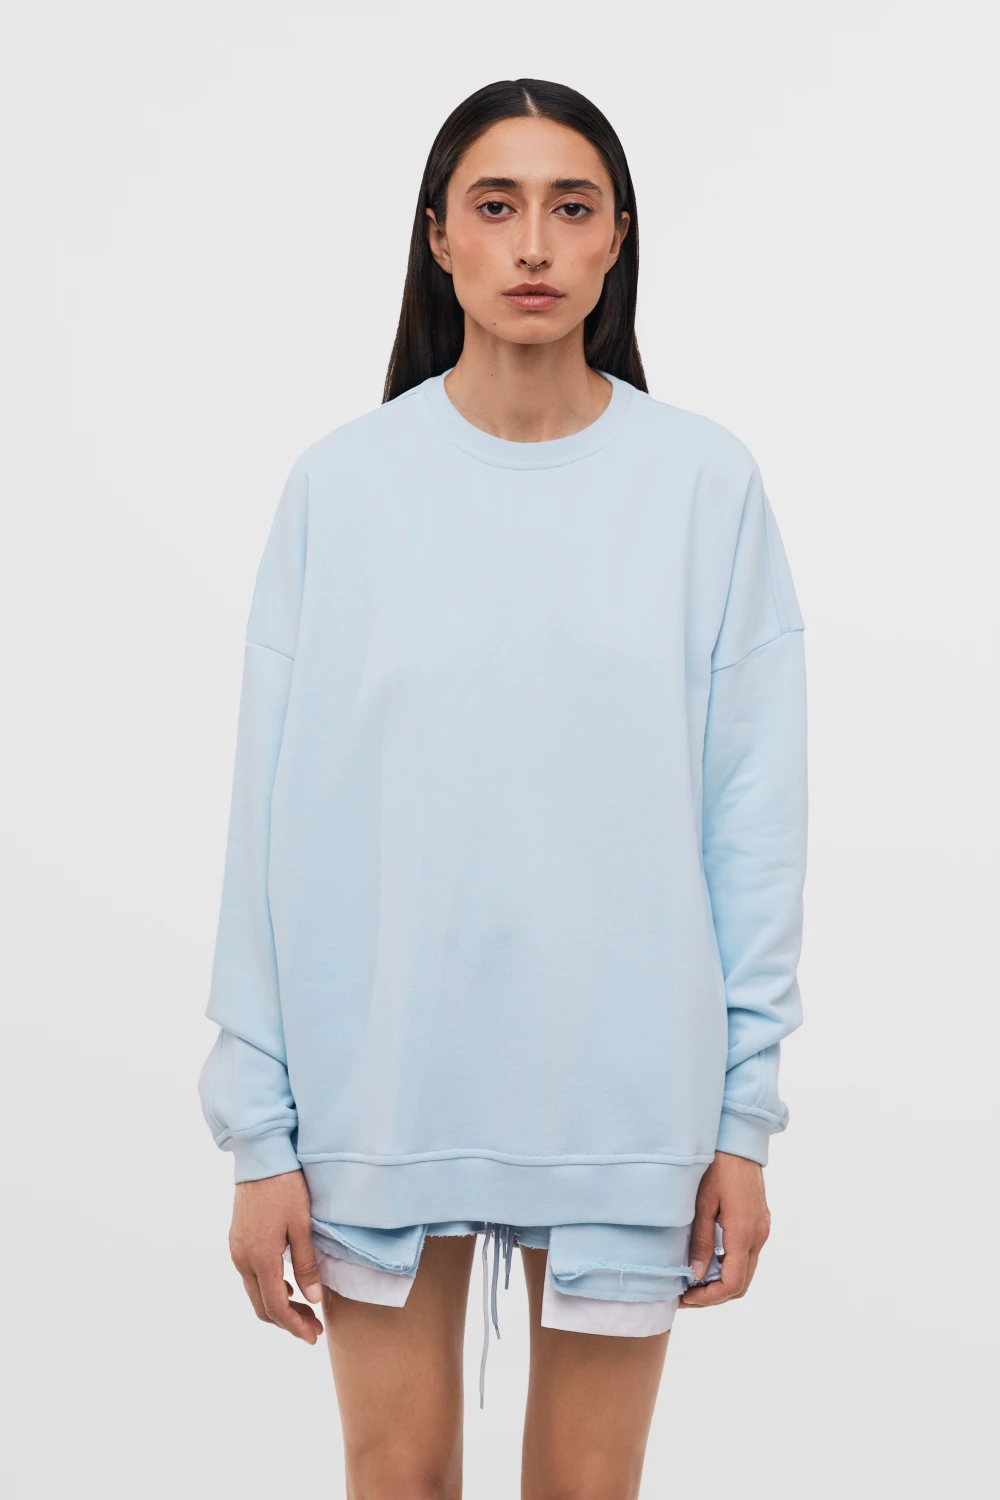 basic sweatshirt in blue color